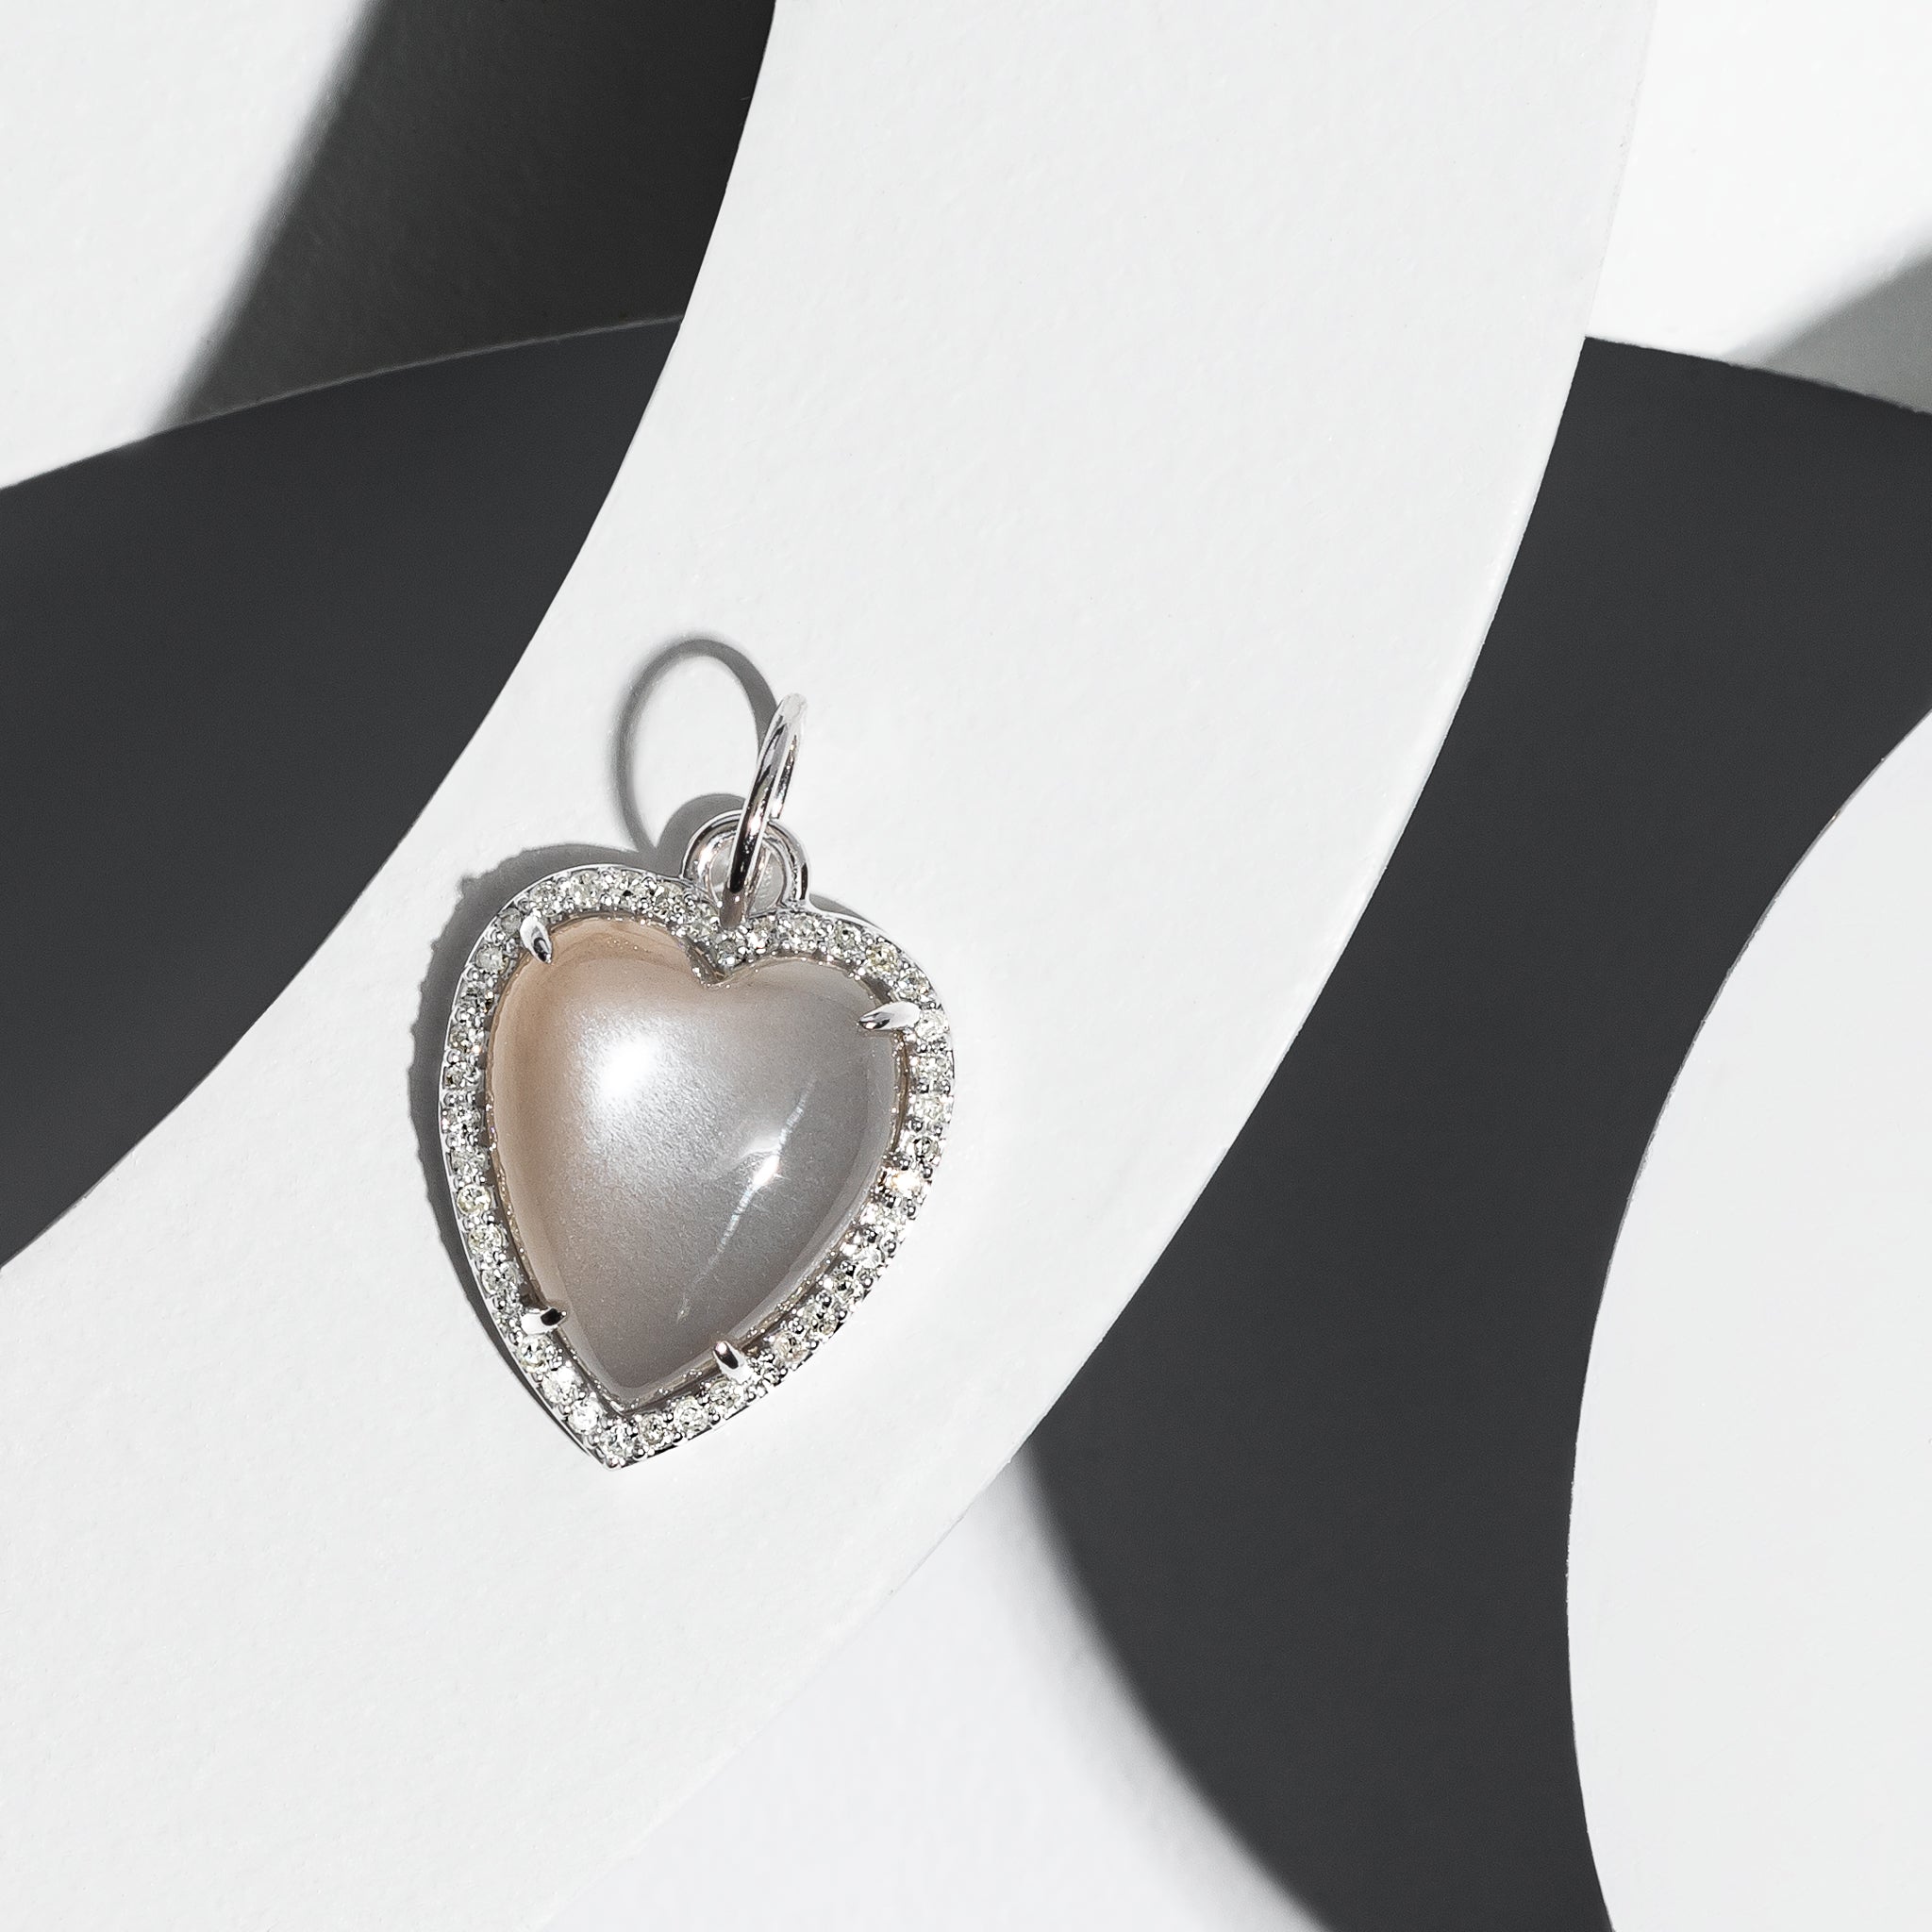 White Gold Diamond and Grey Moonstone Chubby Heart Charm